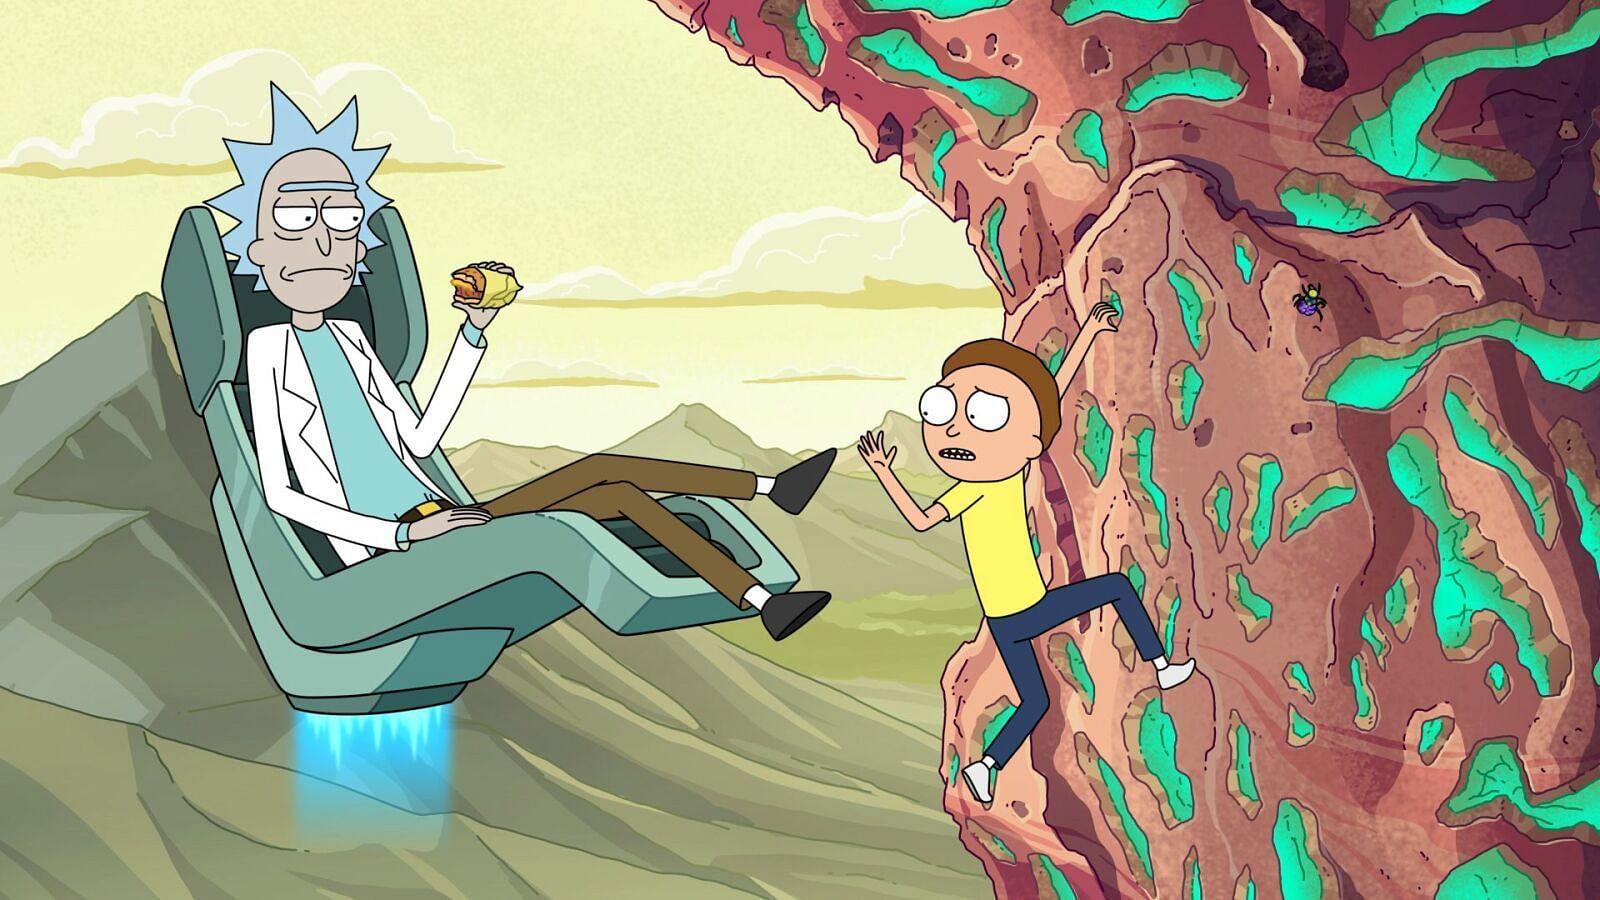 Rick and Morty season 7 will reportedly drop on Adult Swim mid-2023 (Image via Adult Swim)